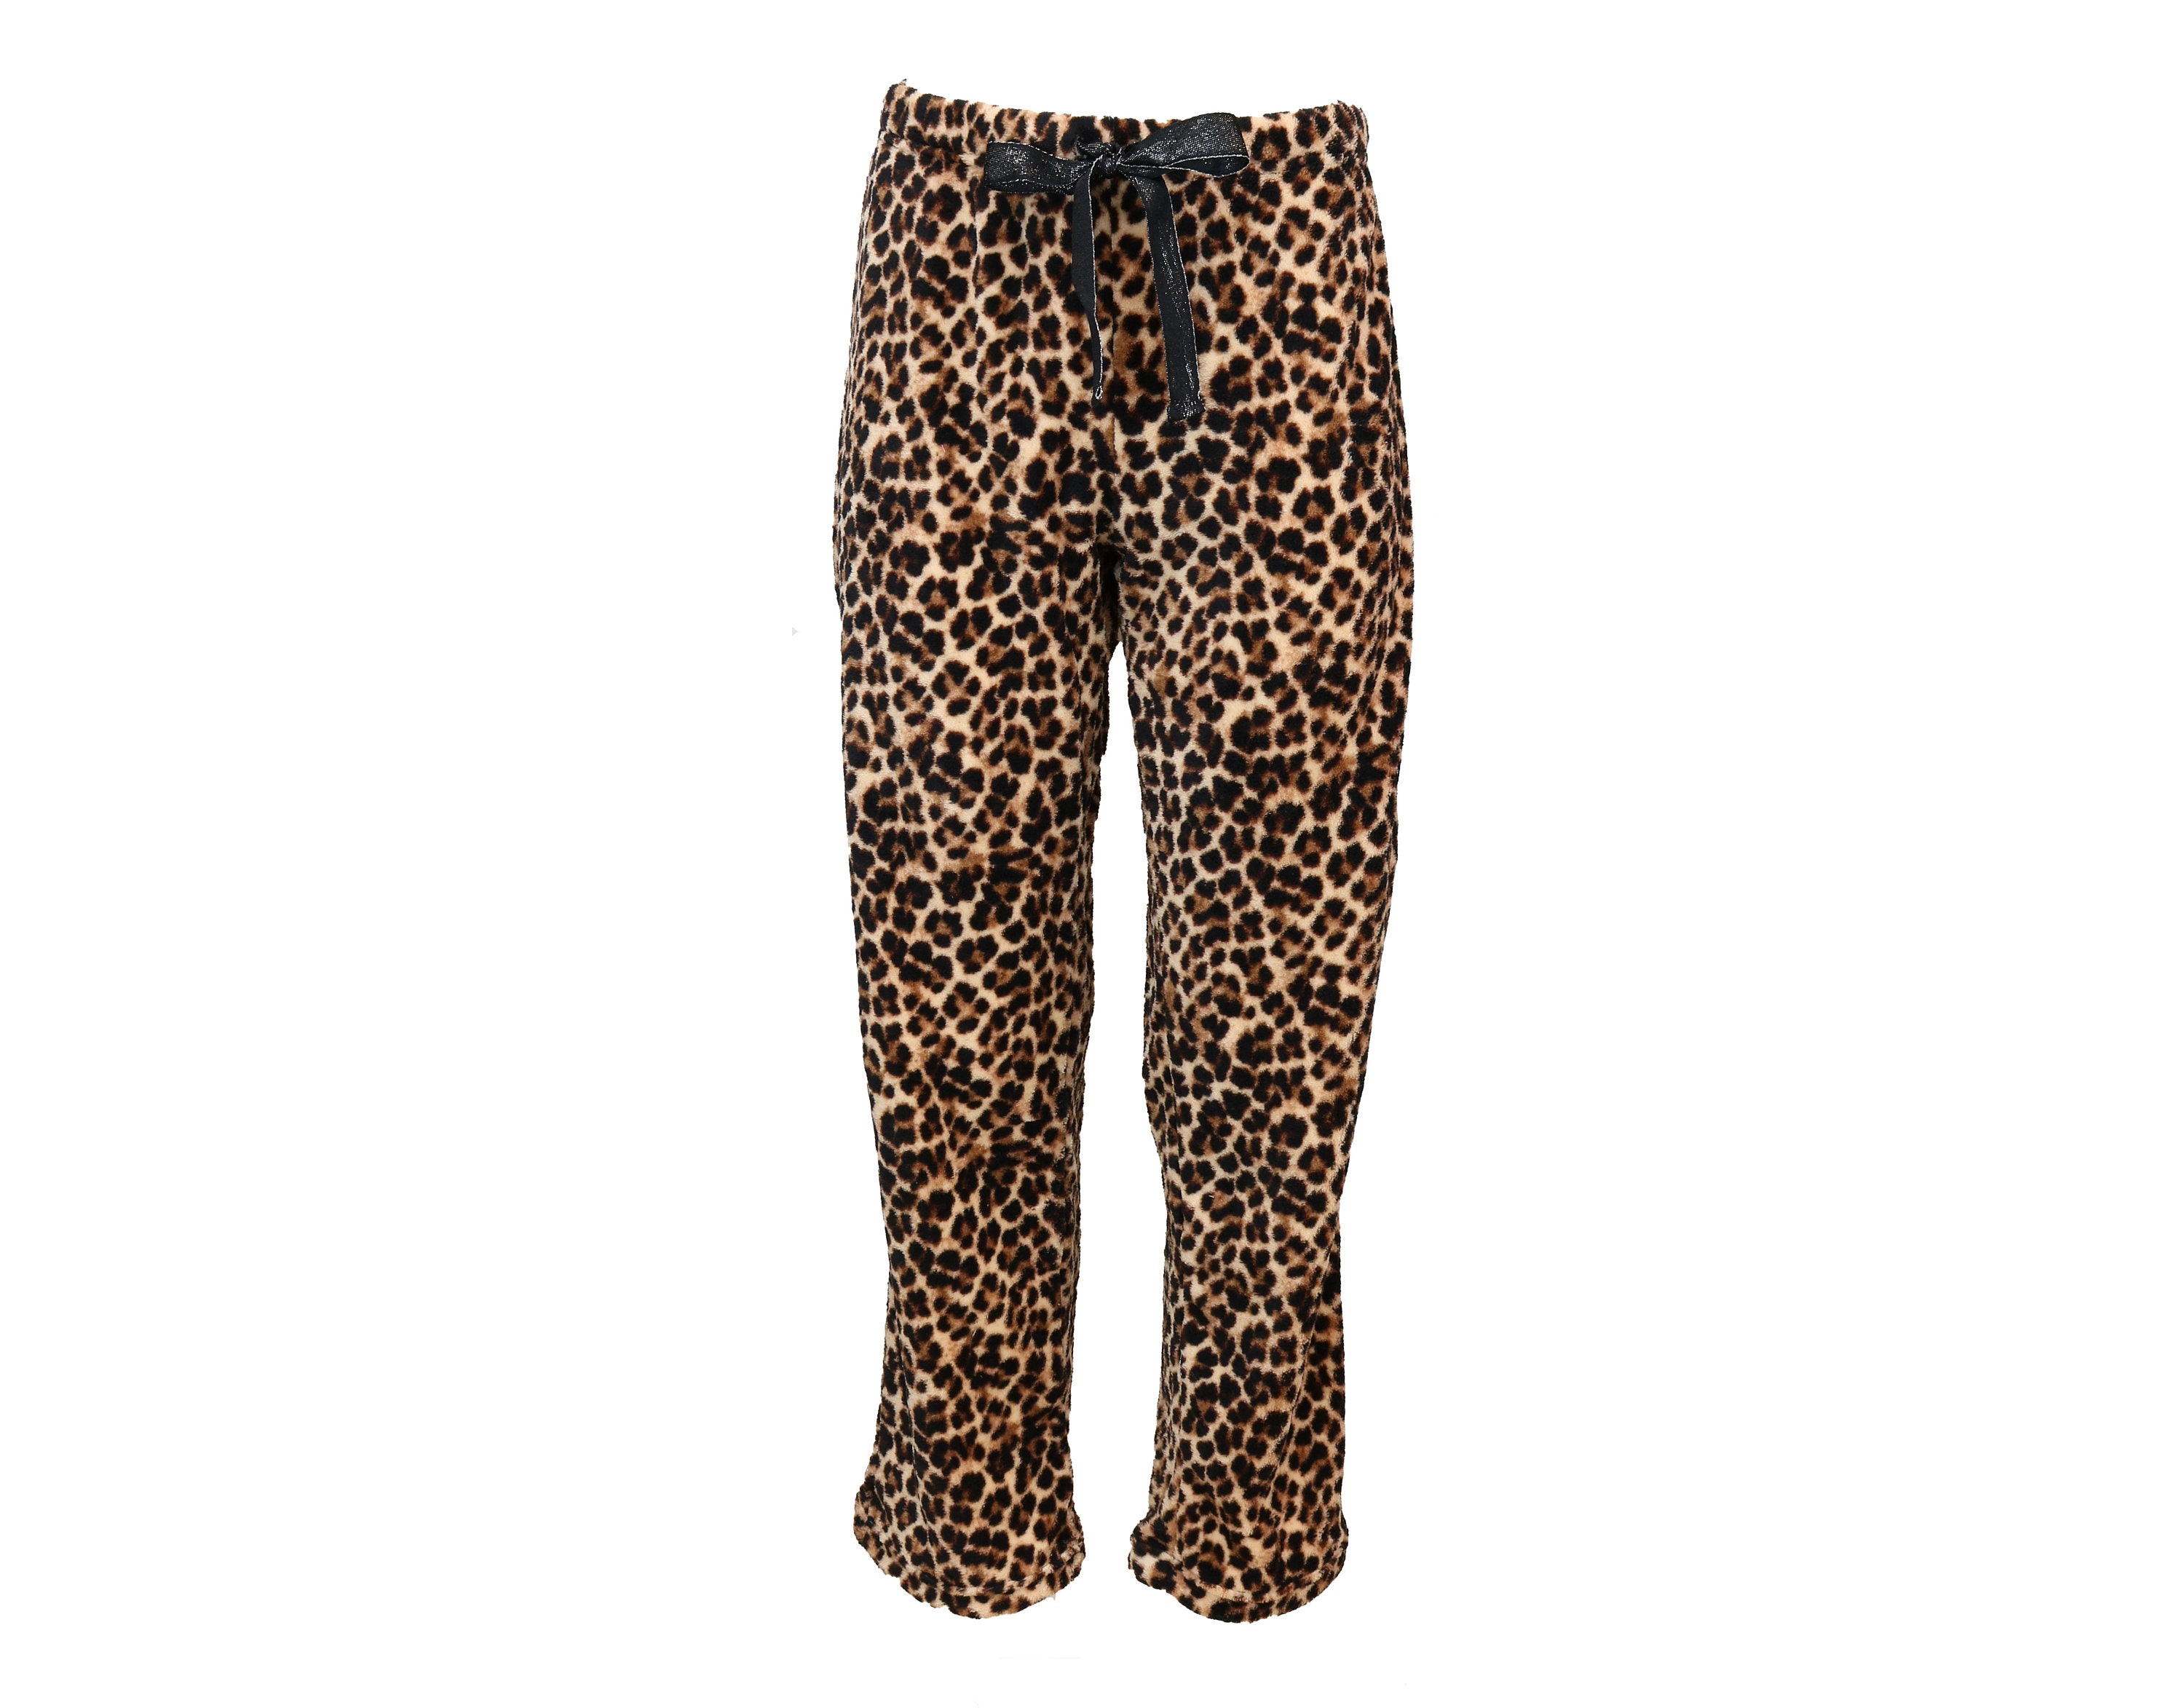 Plays Well With Animals Fleece Leopard Print Pajama Set - Etsy